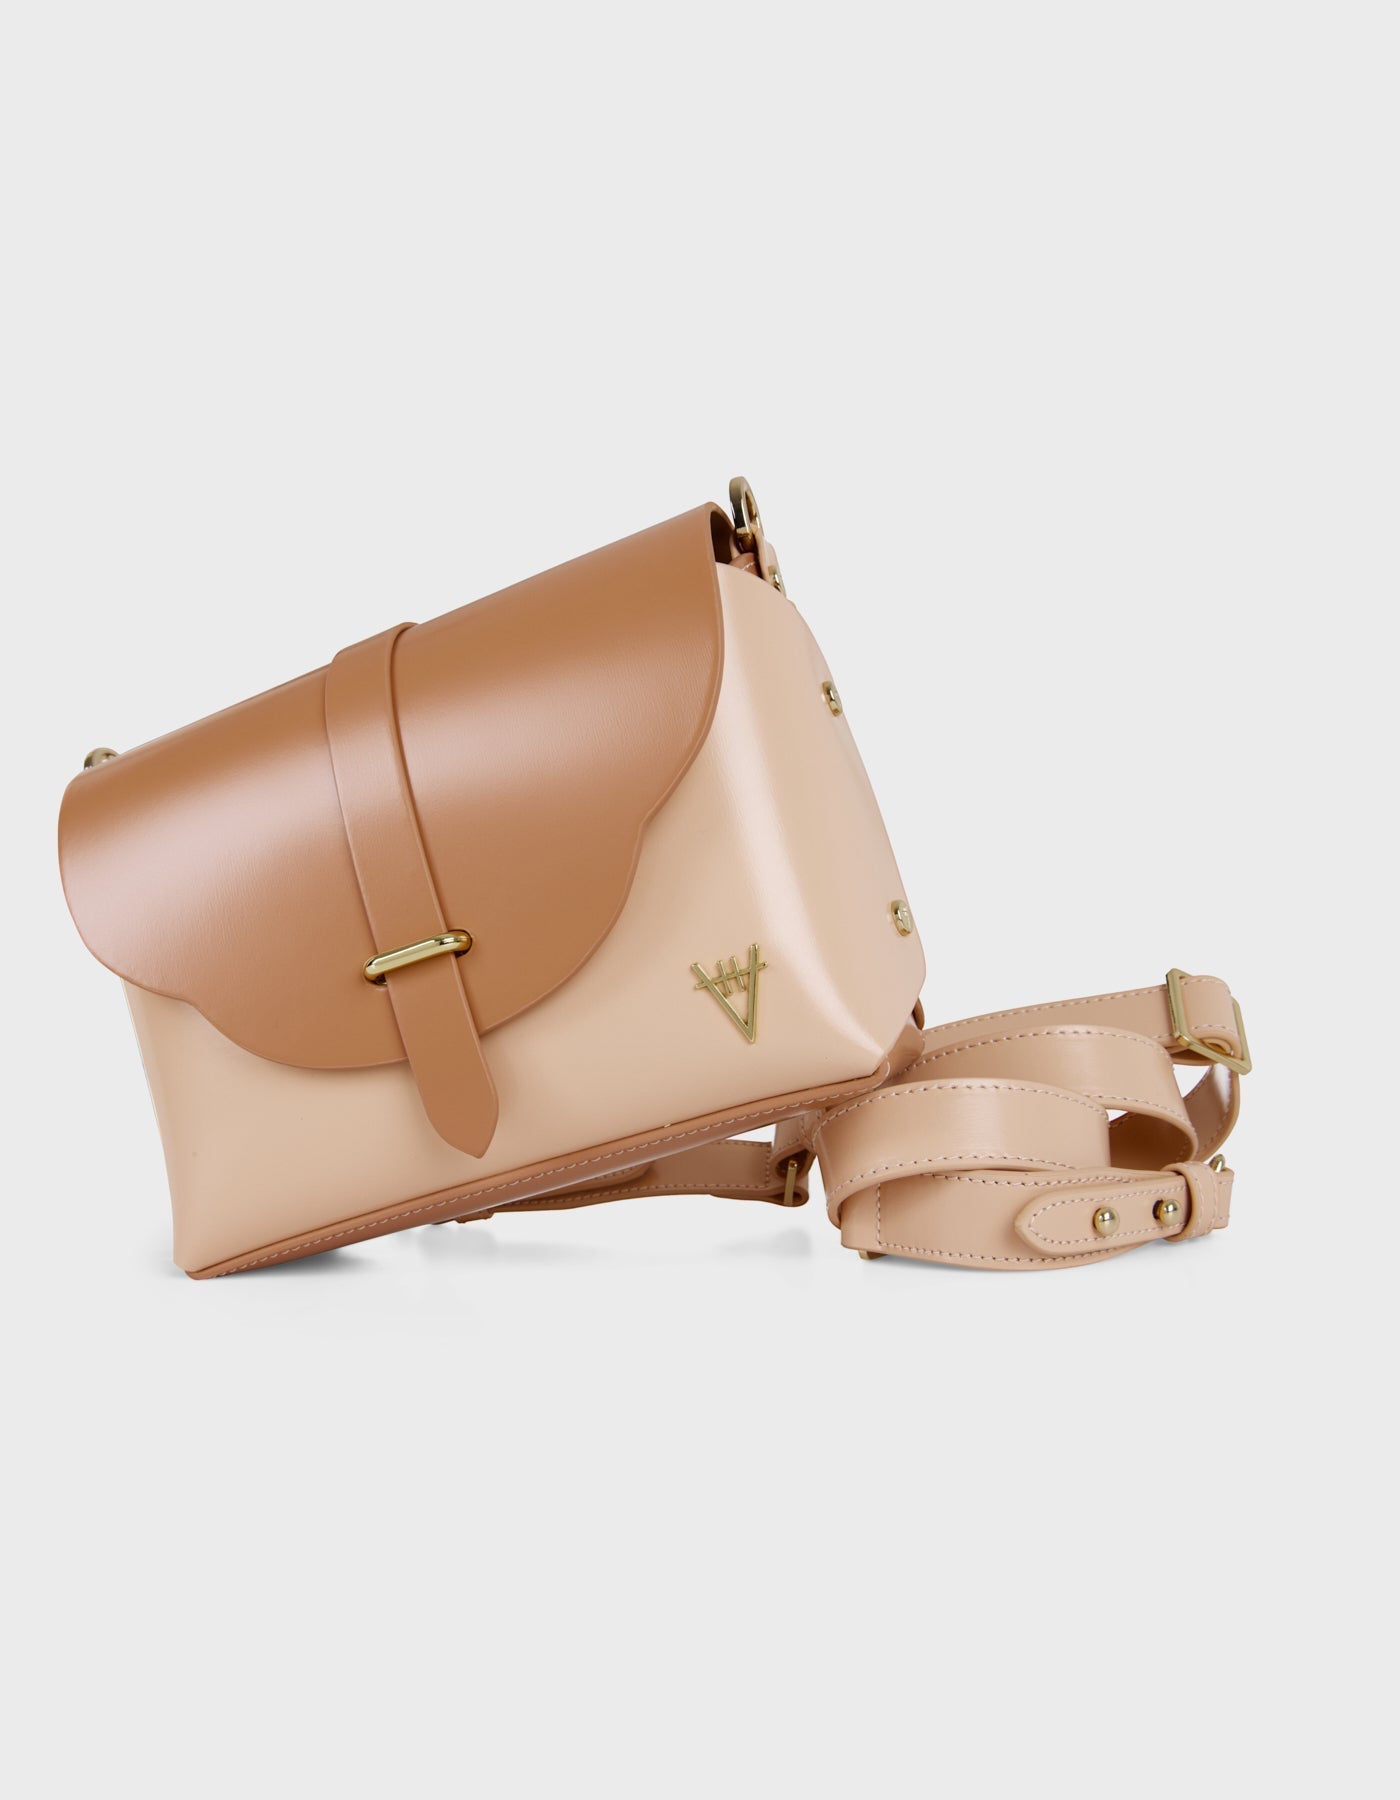 Hiva Atelier | Harmonia Shoulder Bag Peach Sand | Beautiful and Versatile